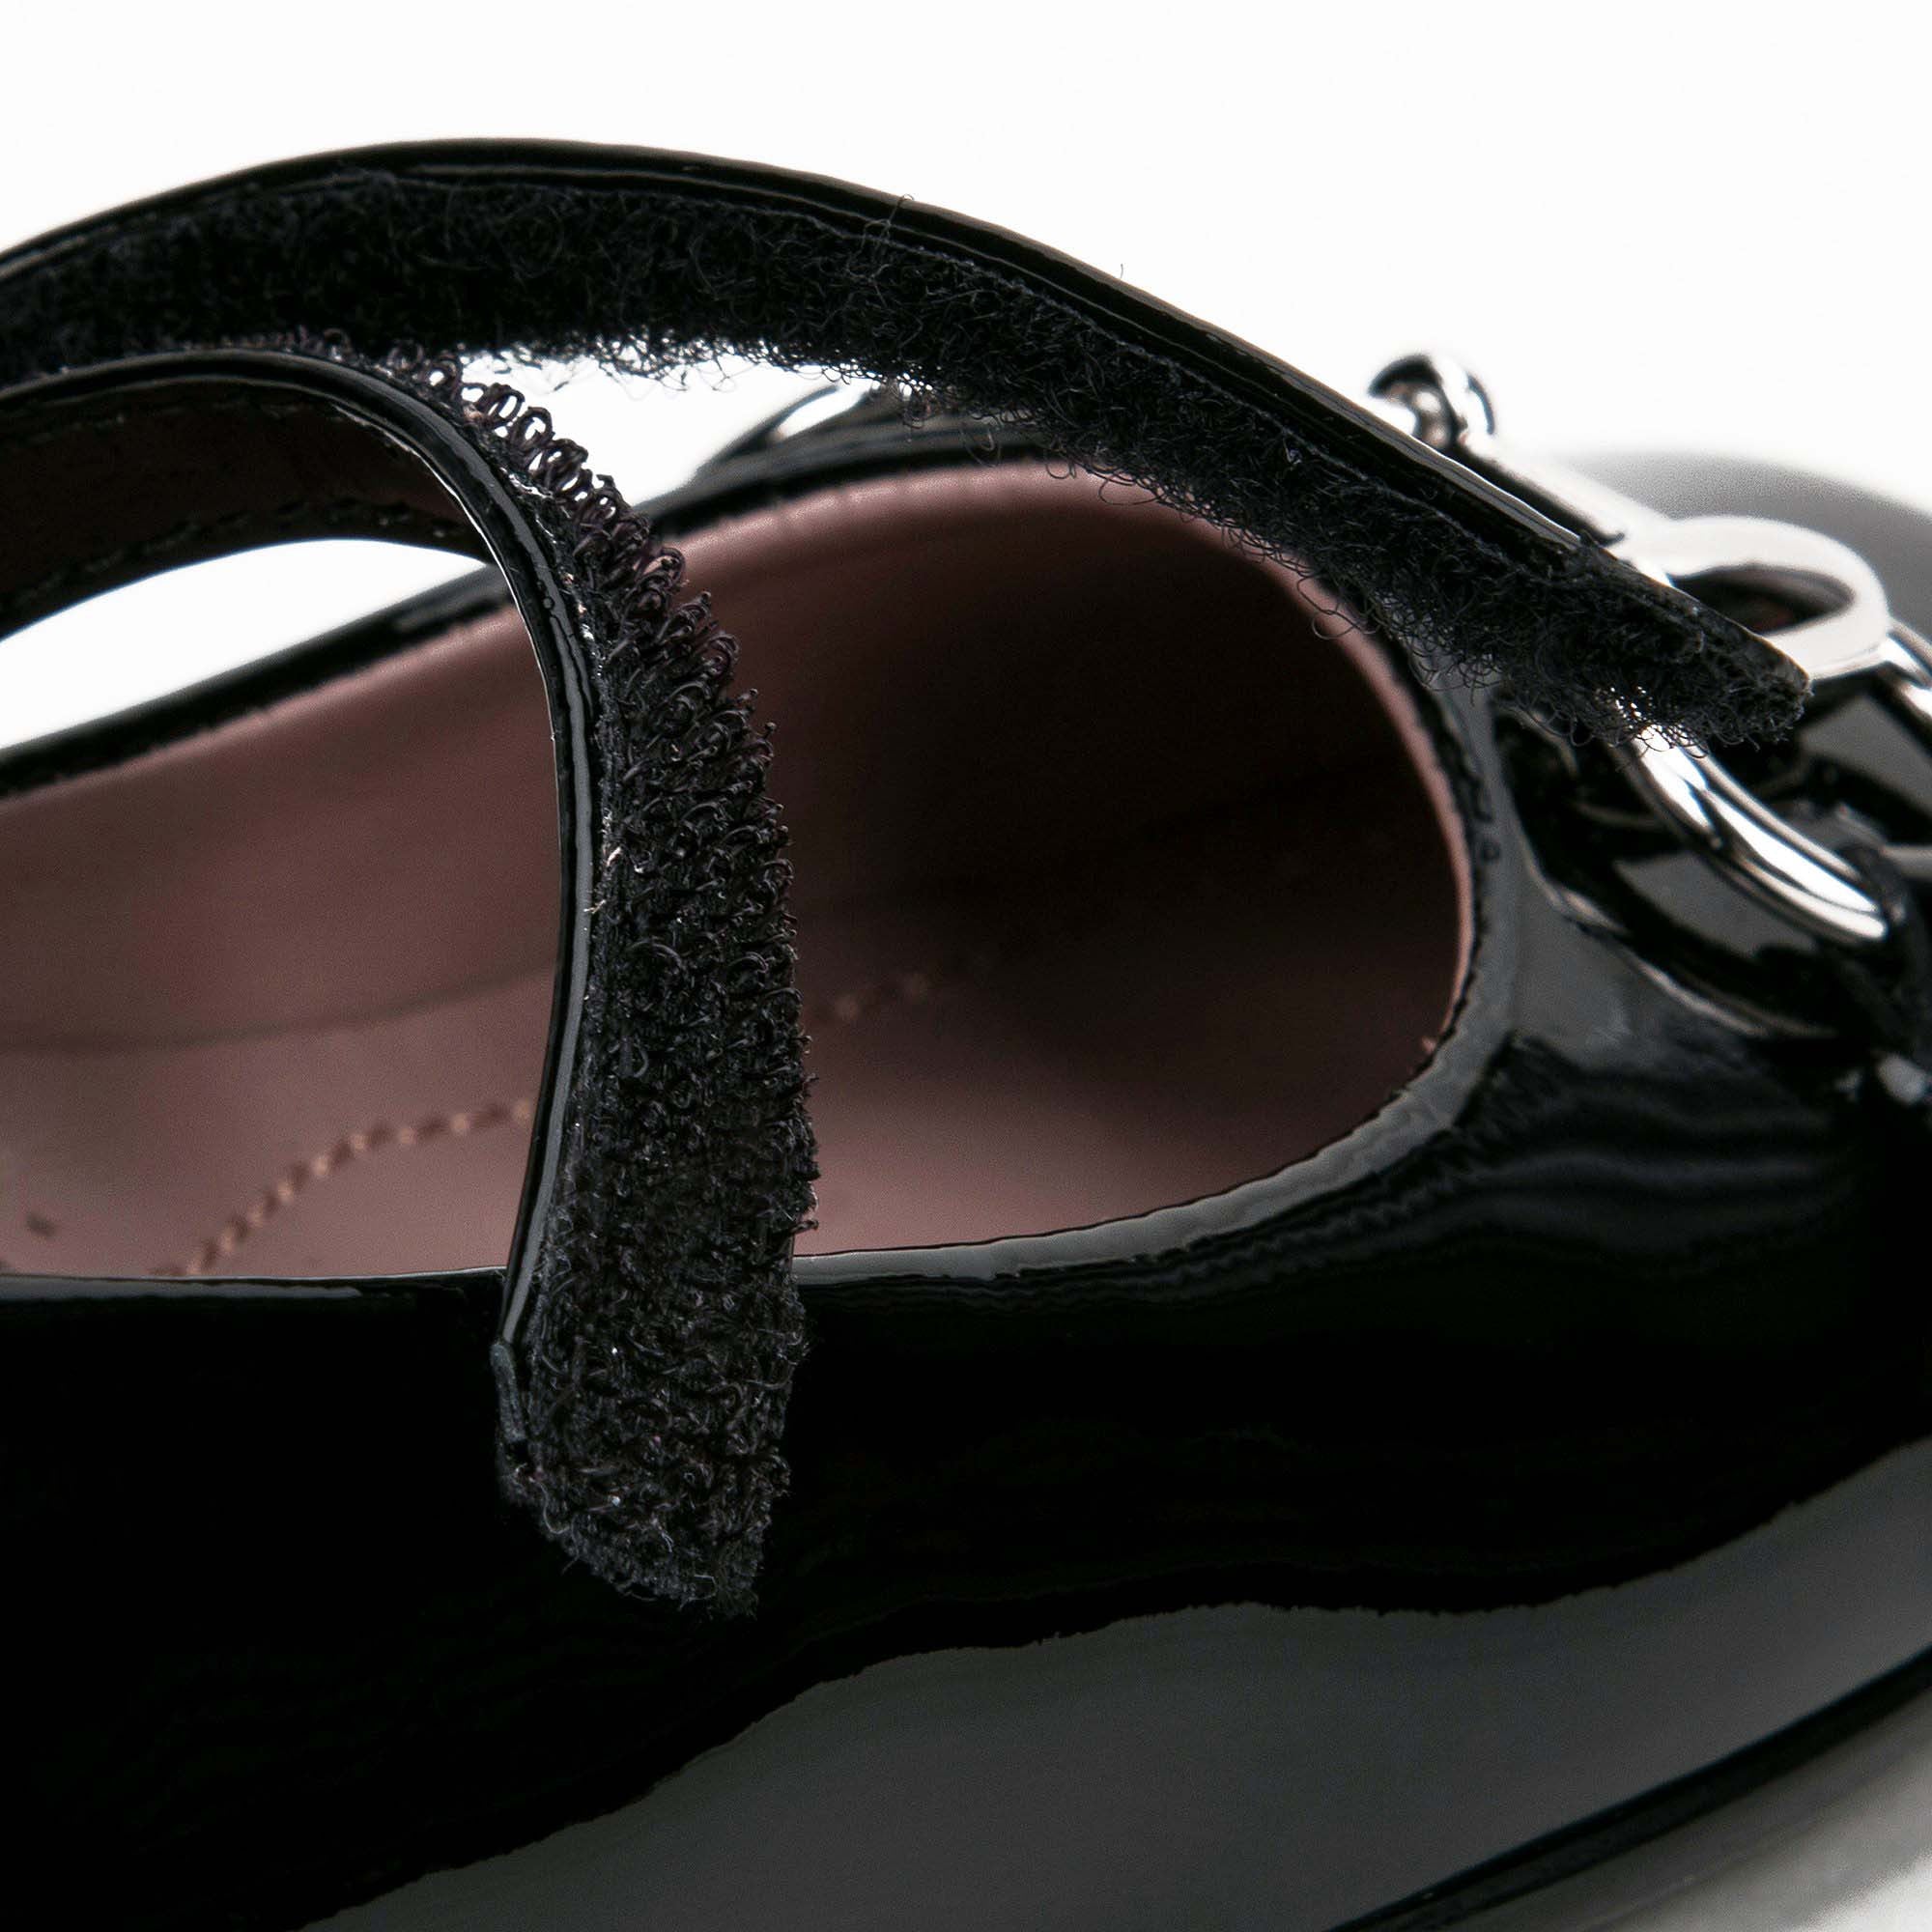 Girls Black Patent Leather Horsebit Shoes